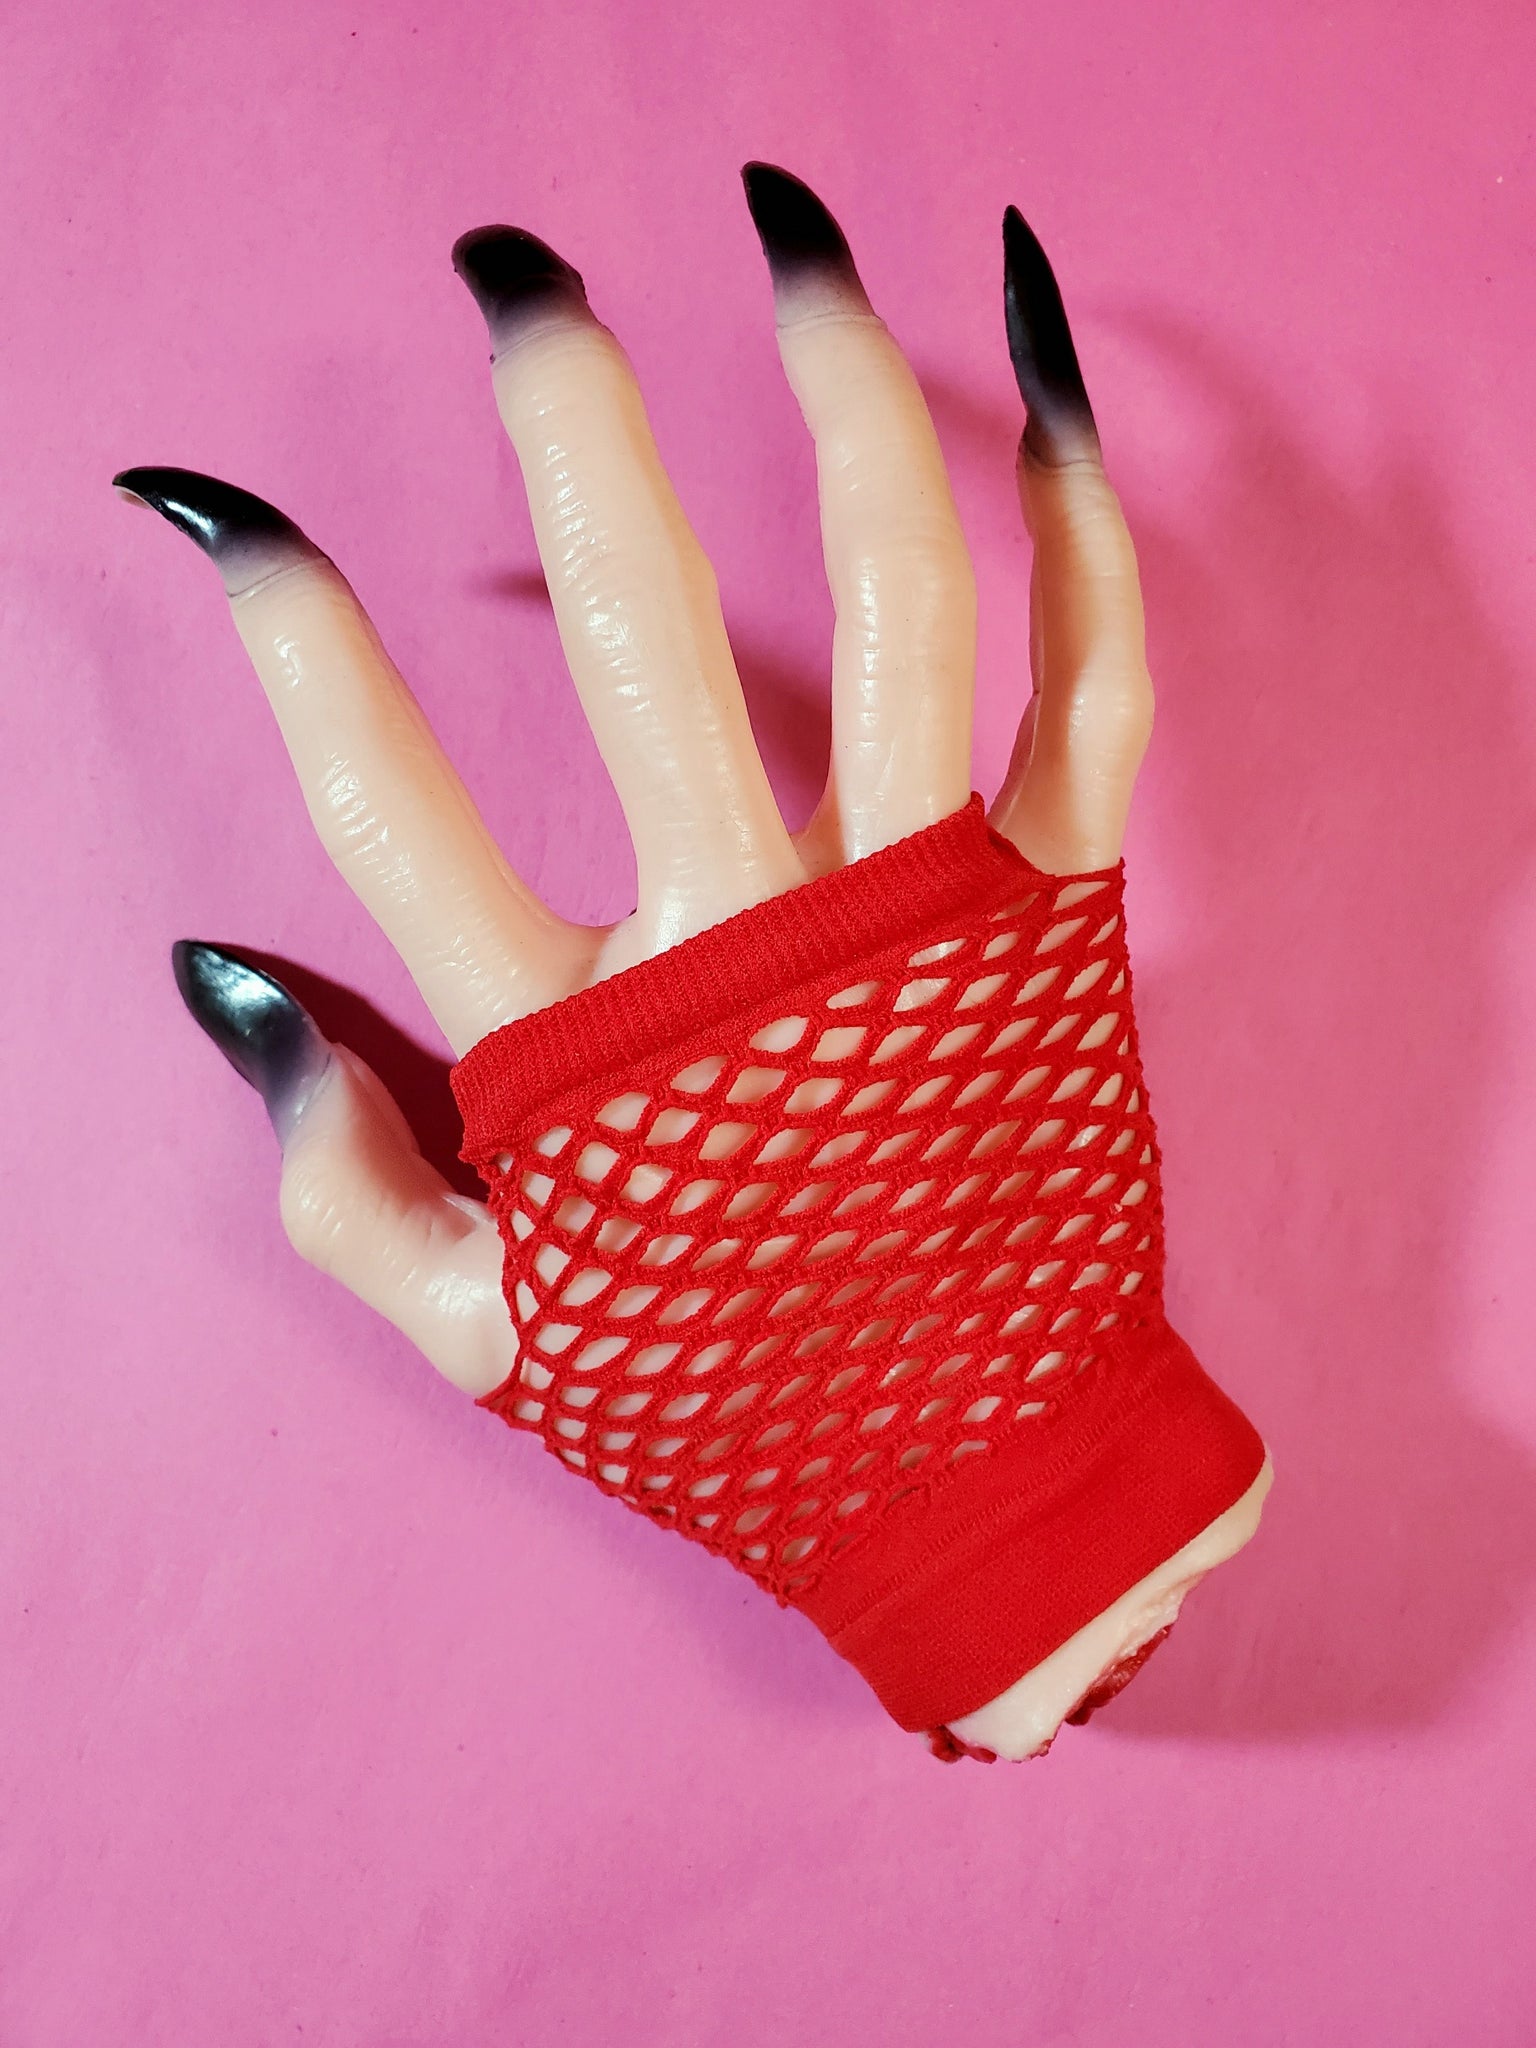 Wrist-length bright red fingerless fishnet glove, shown on halloween prop hand